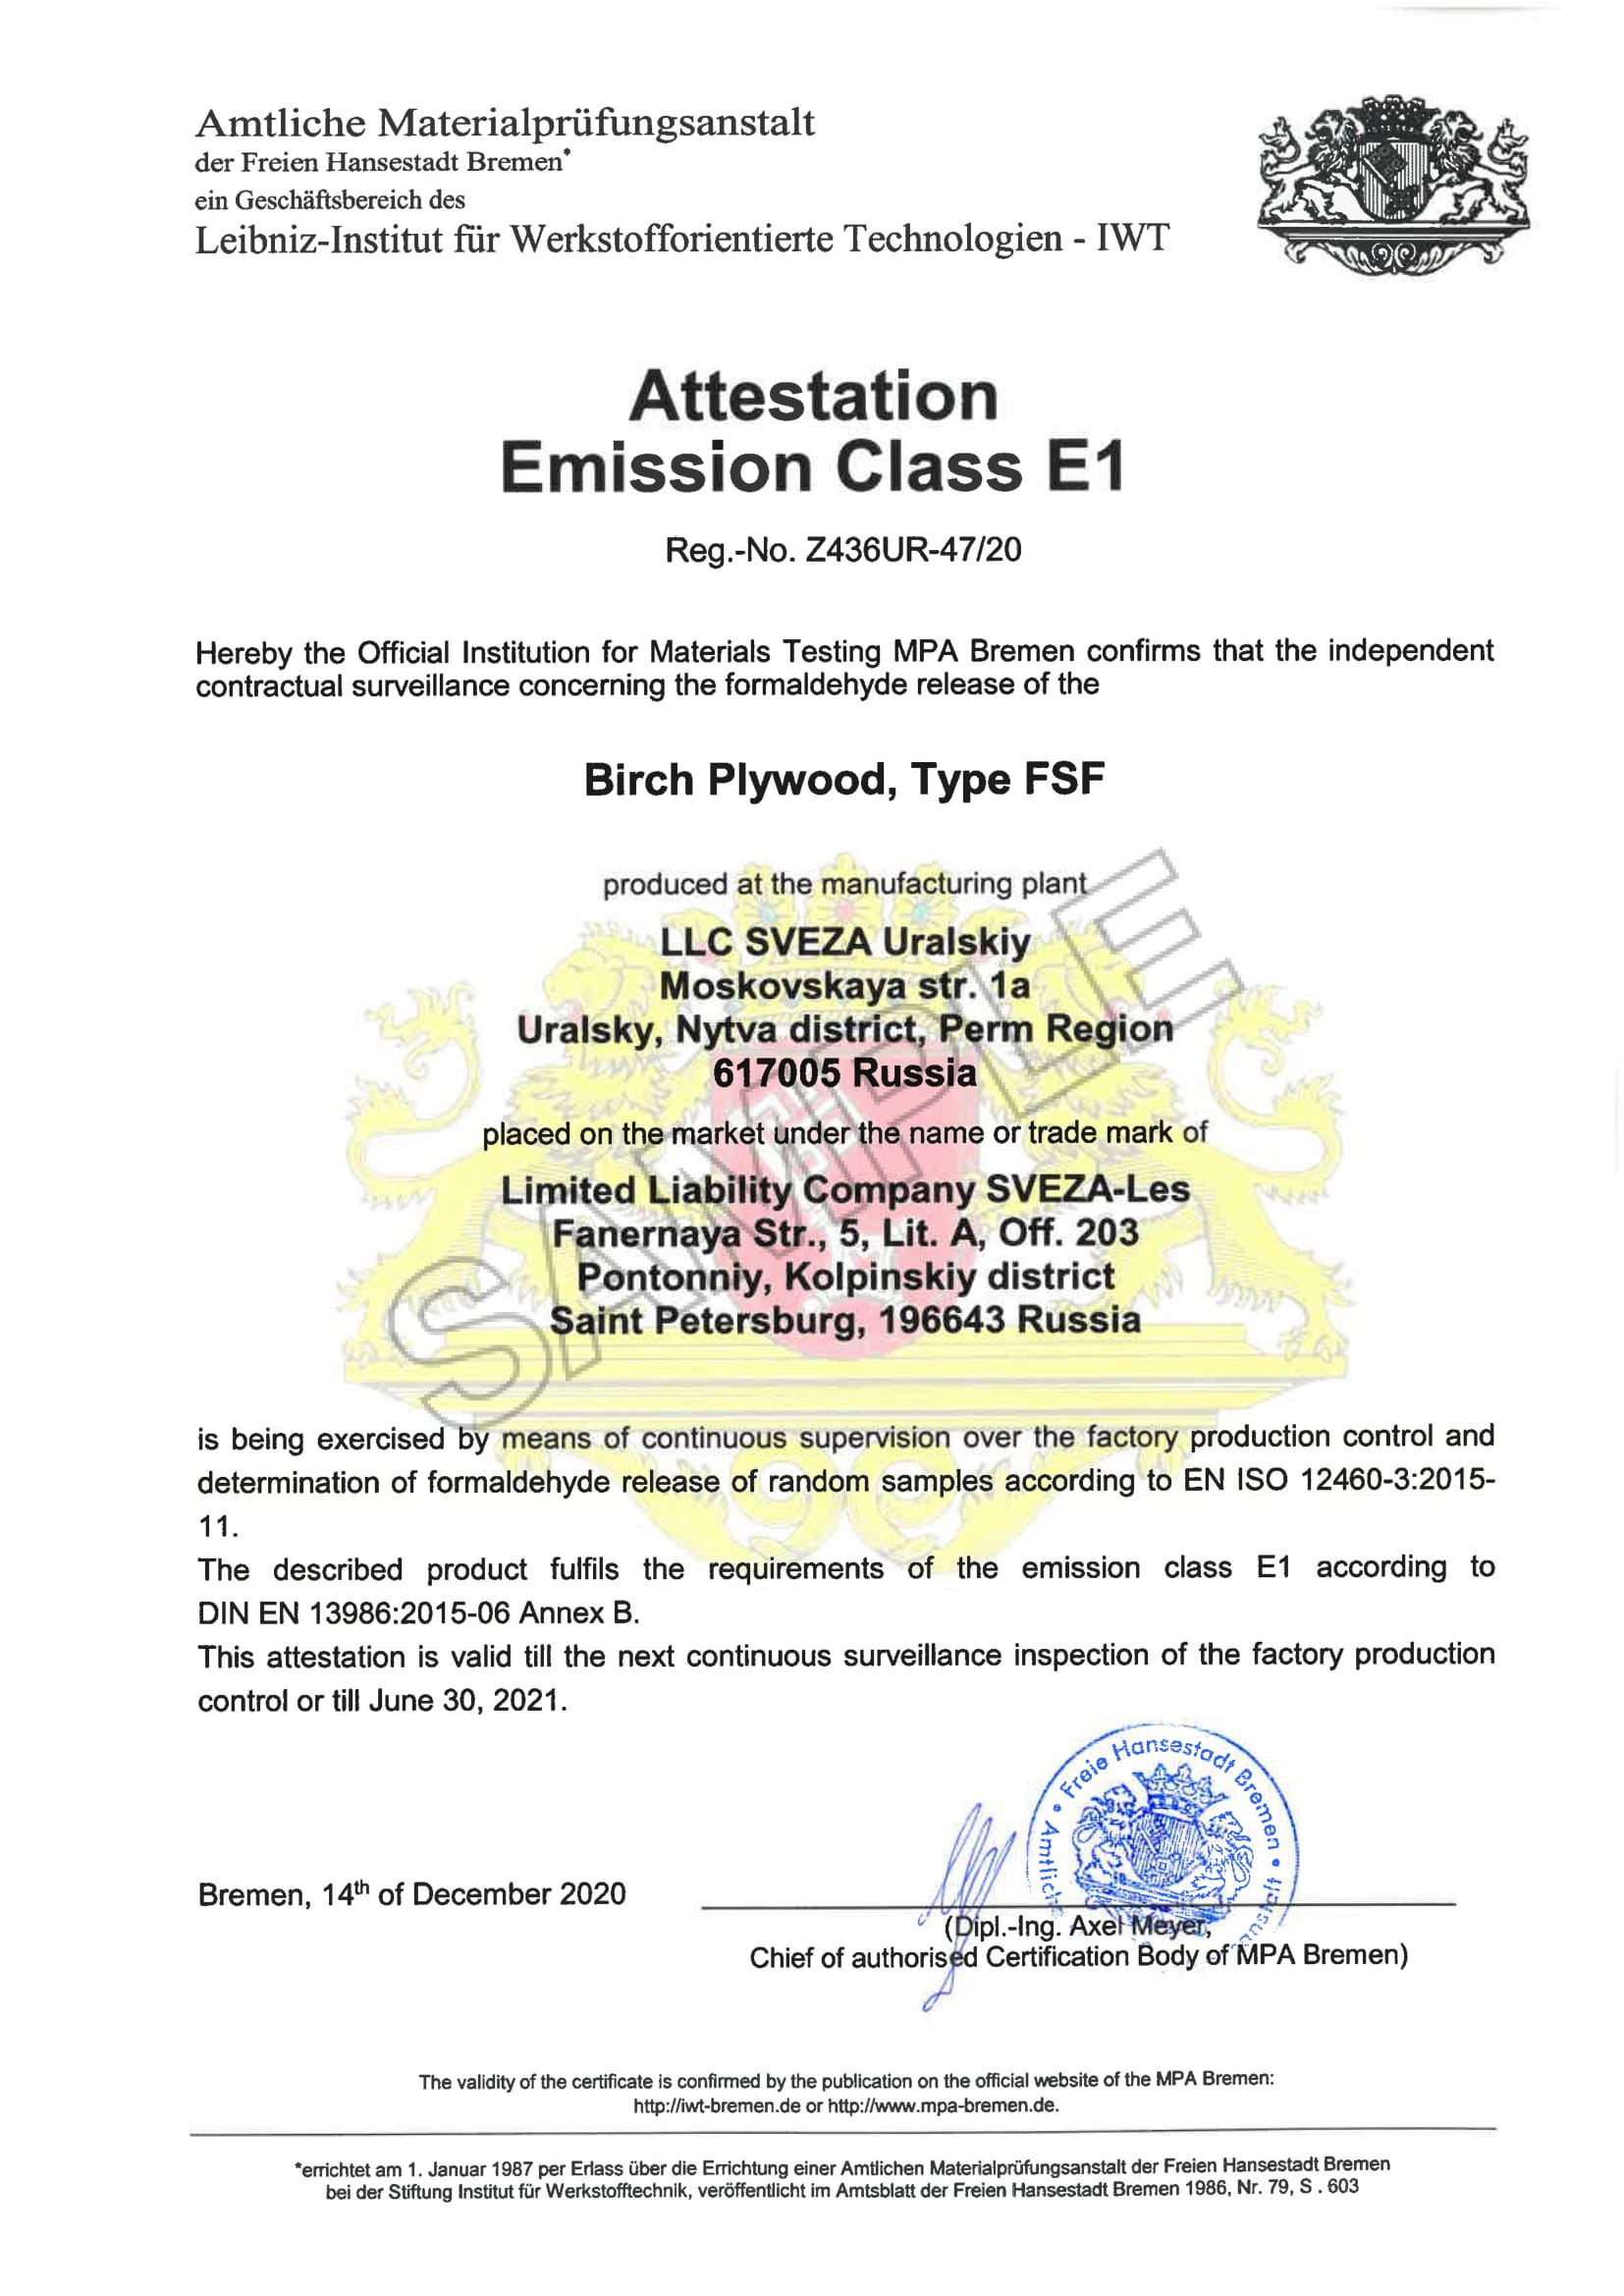 E1 Formaldehyde Emission Certificate (FILM)